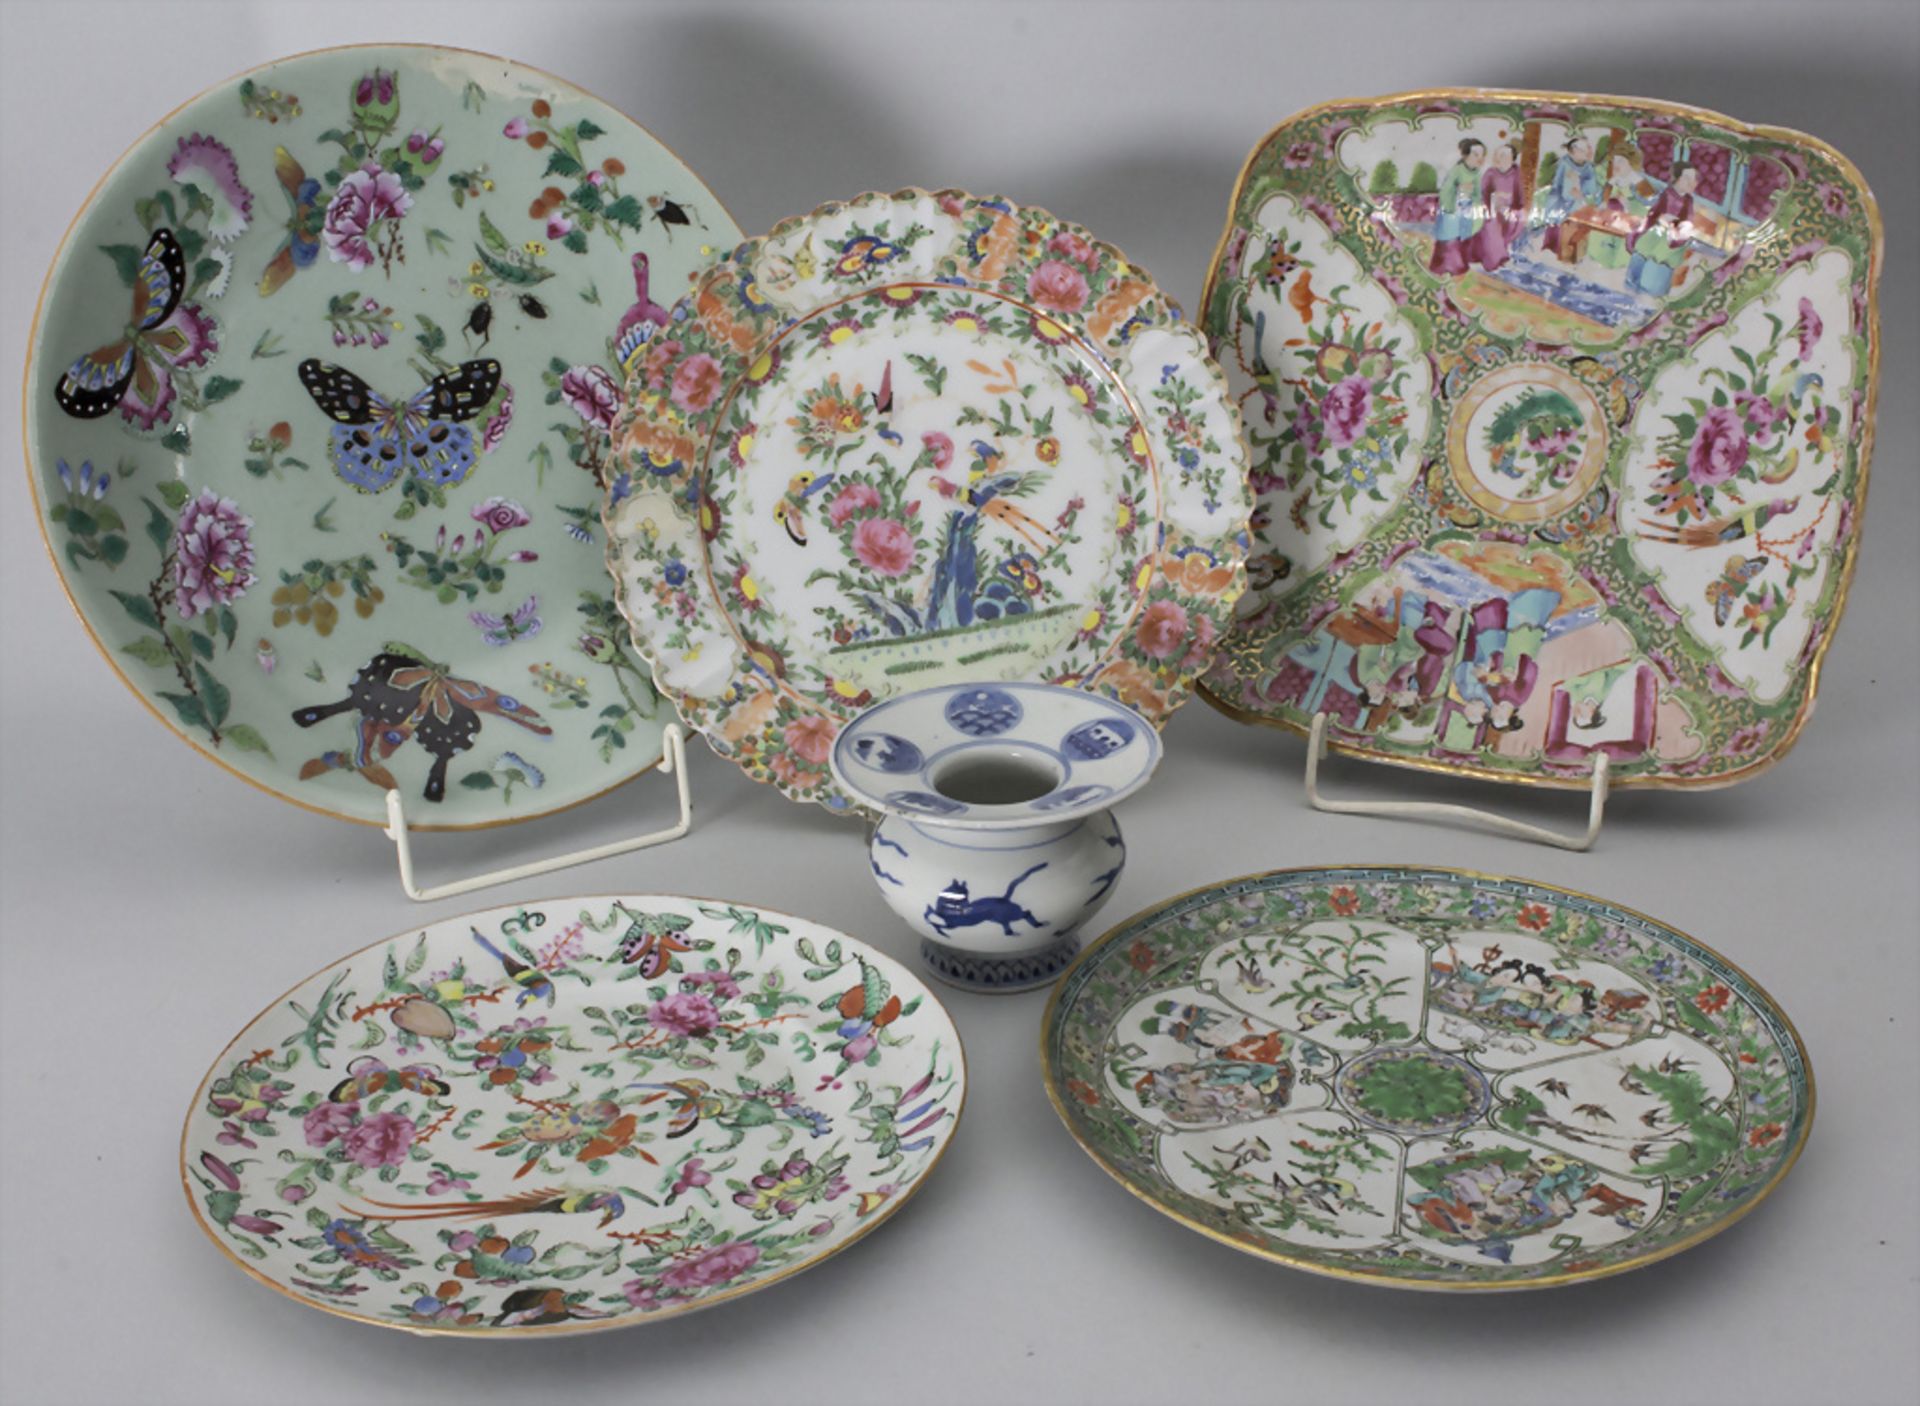 6-teiliges Konvolut Porzellan / A set of 6 pieces of porcelain, China